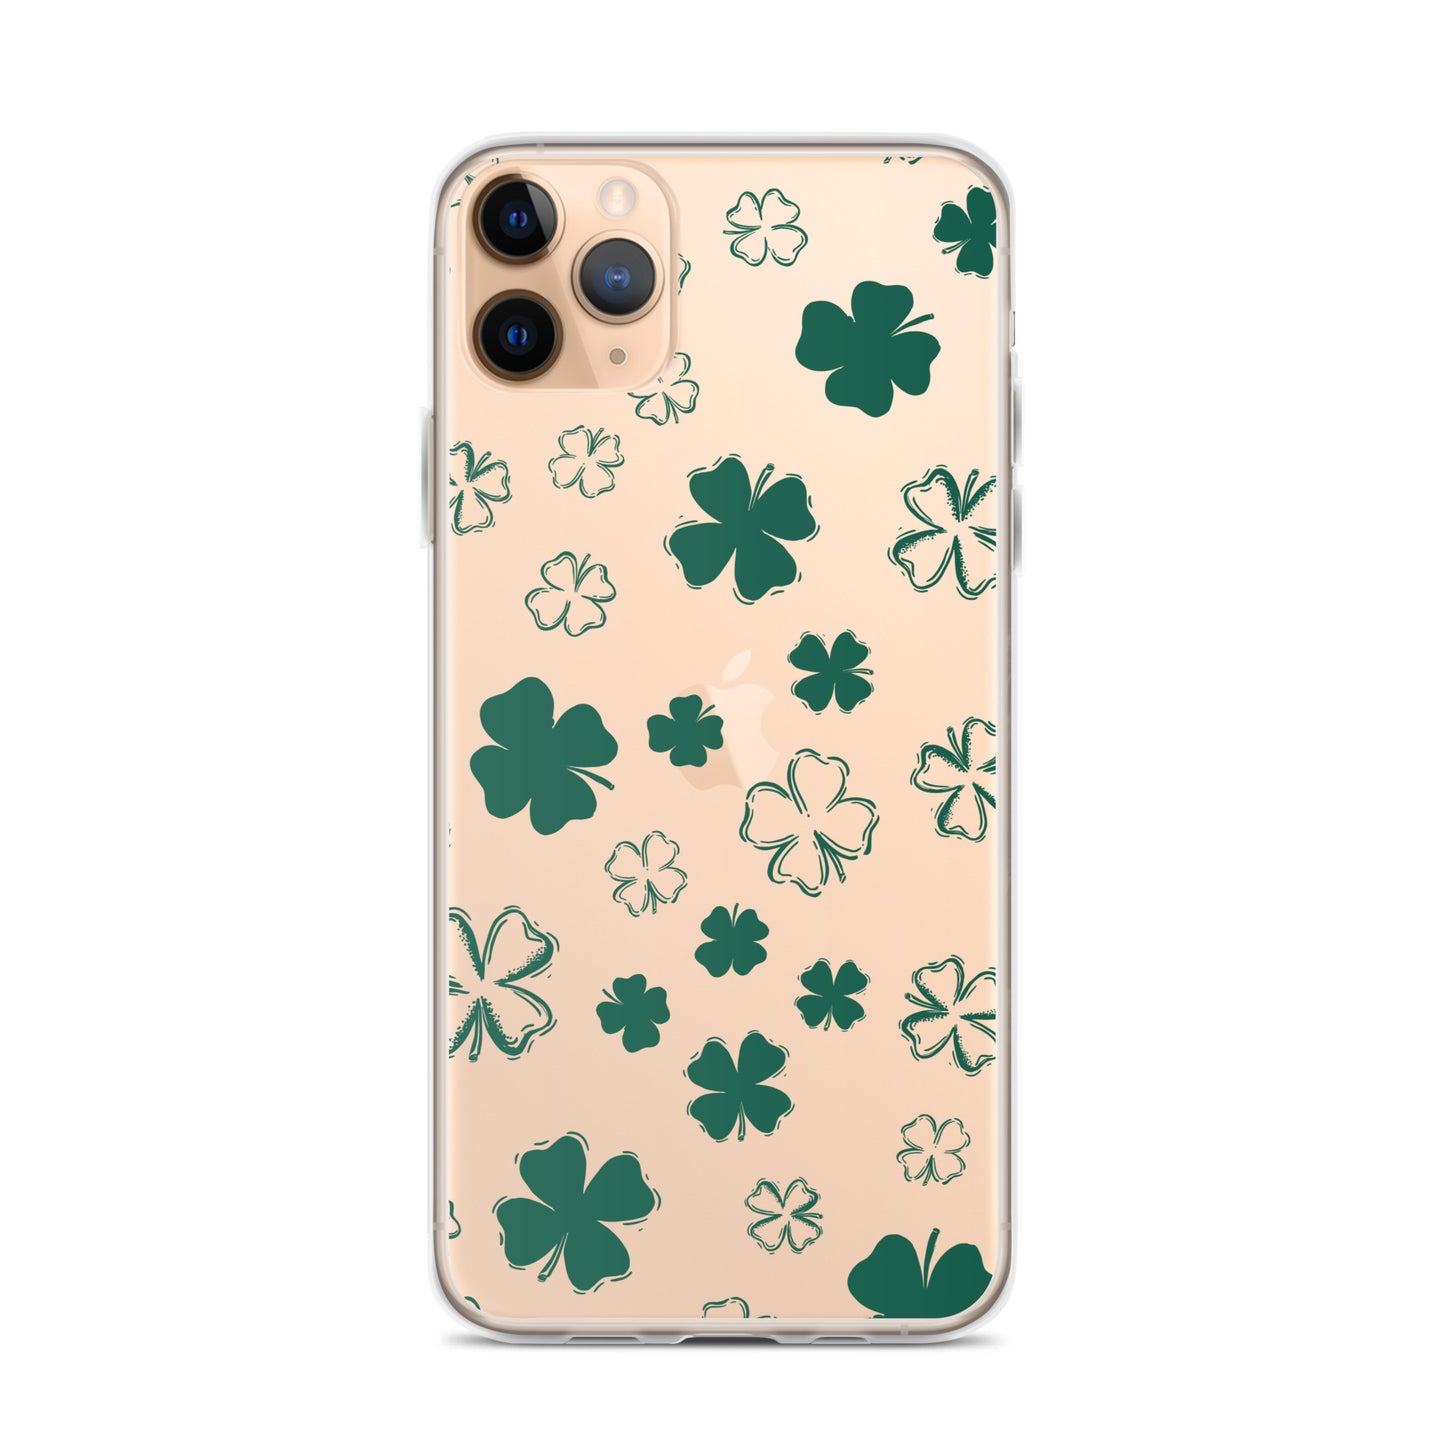 Saint Patrick's Day Four-leaf Clover iPhone Case